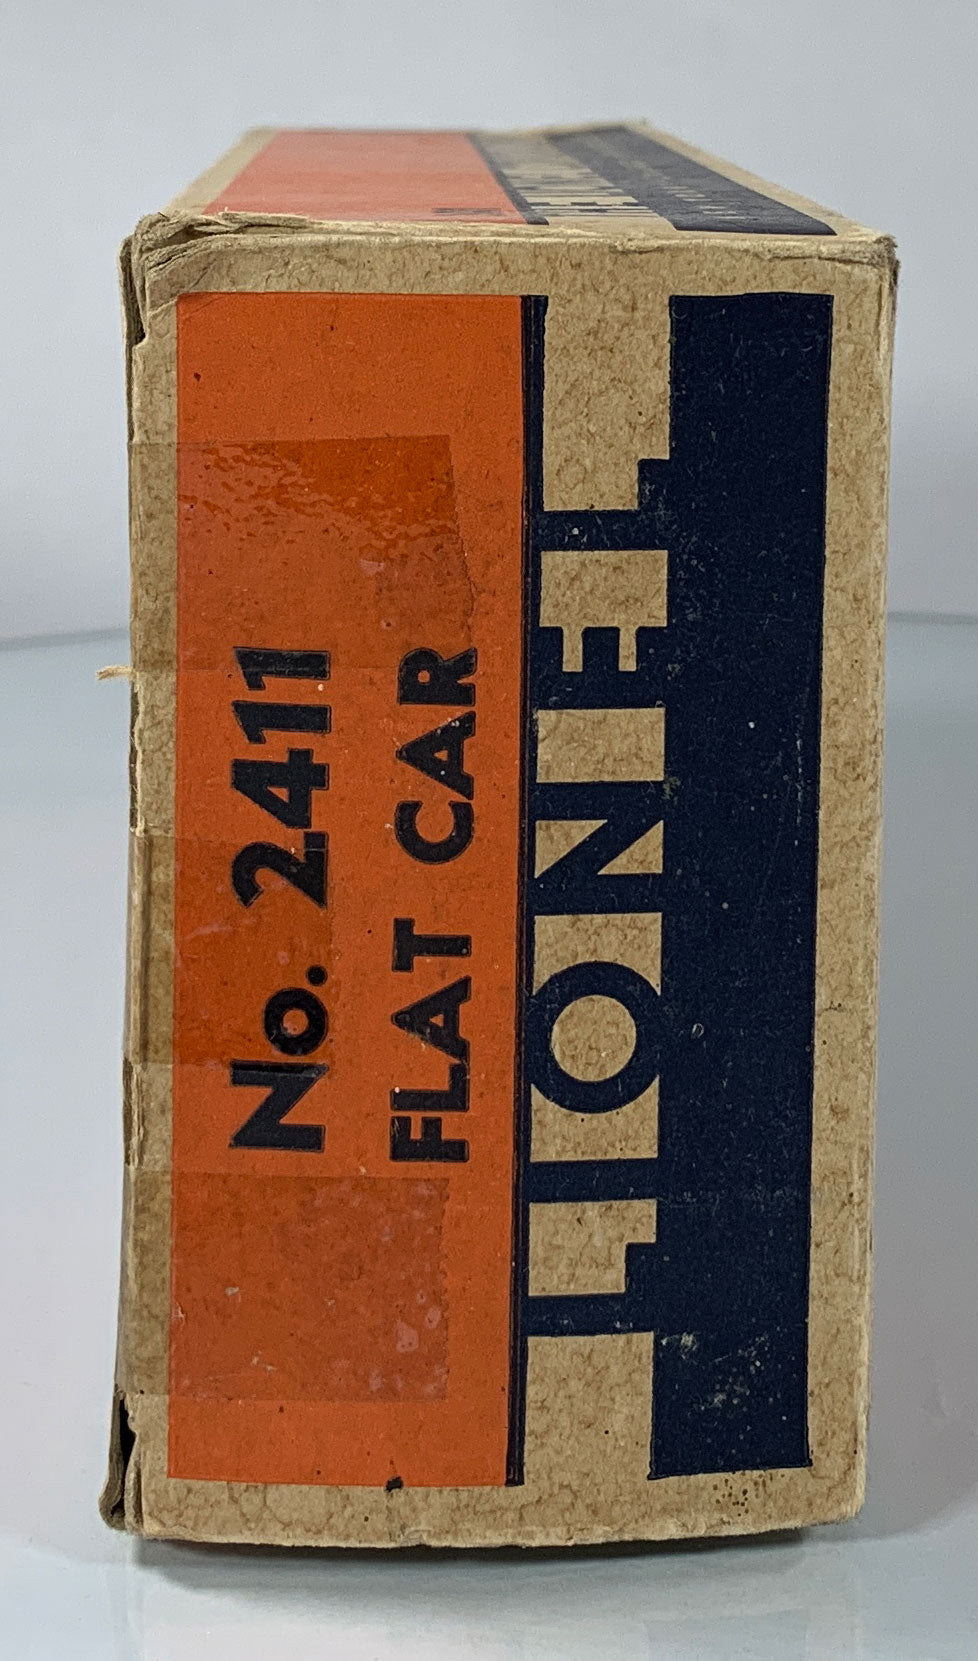 LIONEL • O GAUGE • 1947-1948 Postwar 2411 Flat Car with Logs • Original Box • GOOD COND